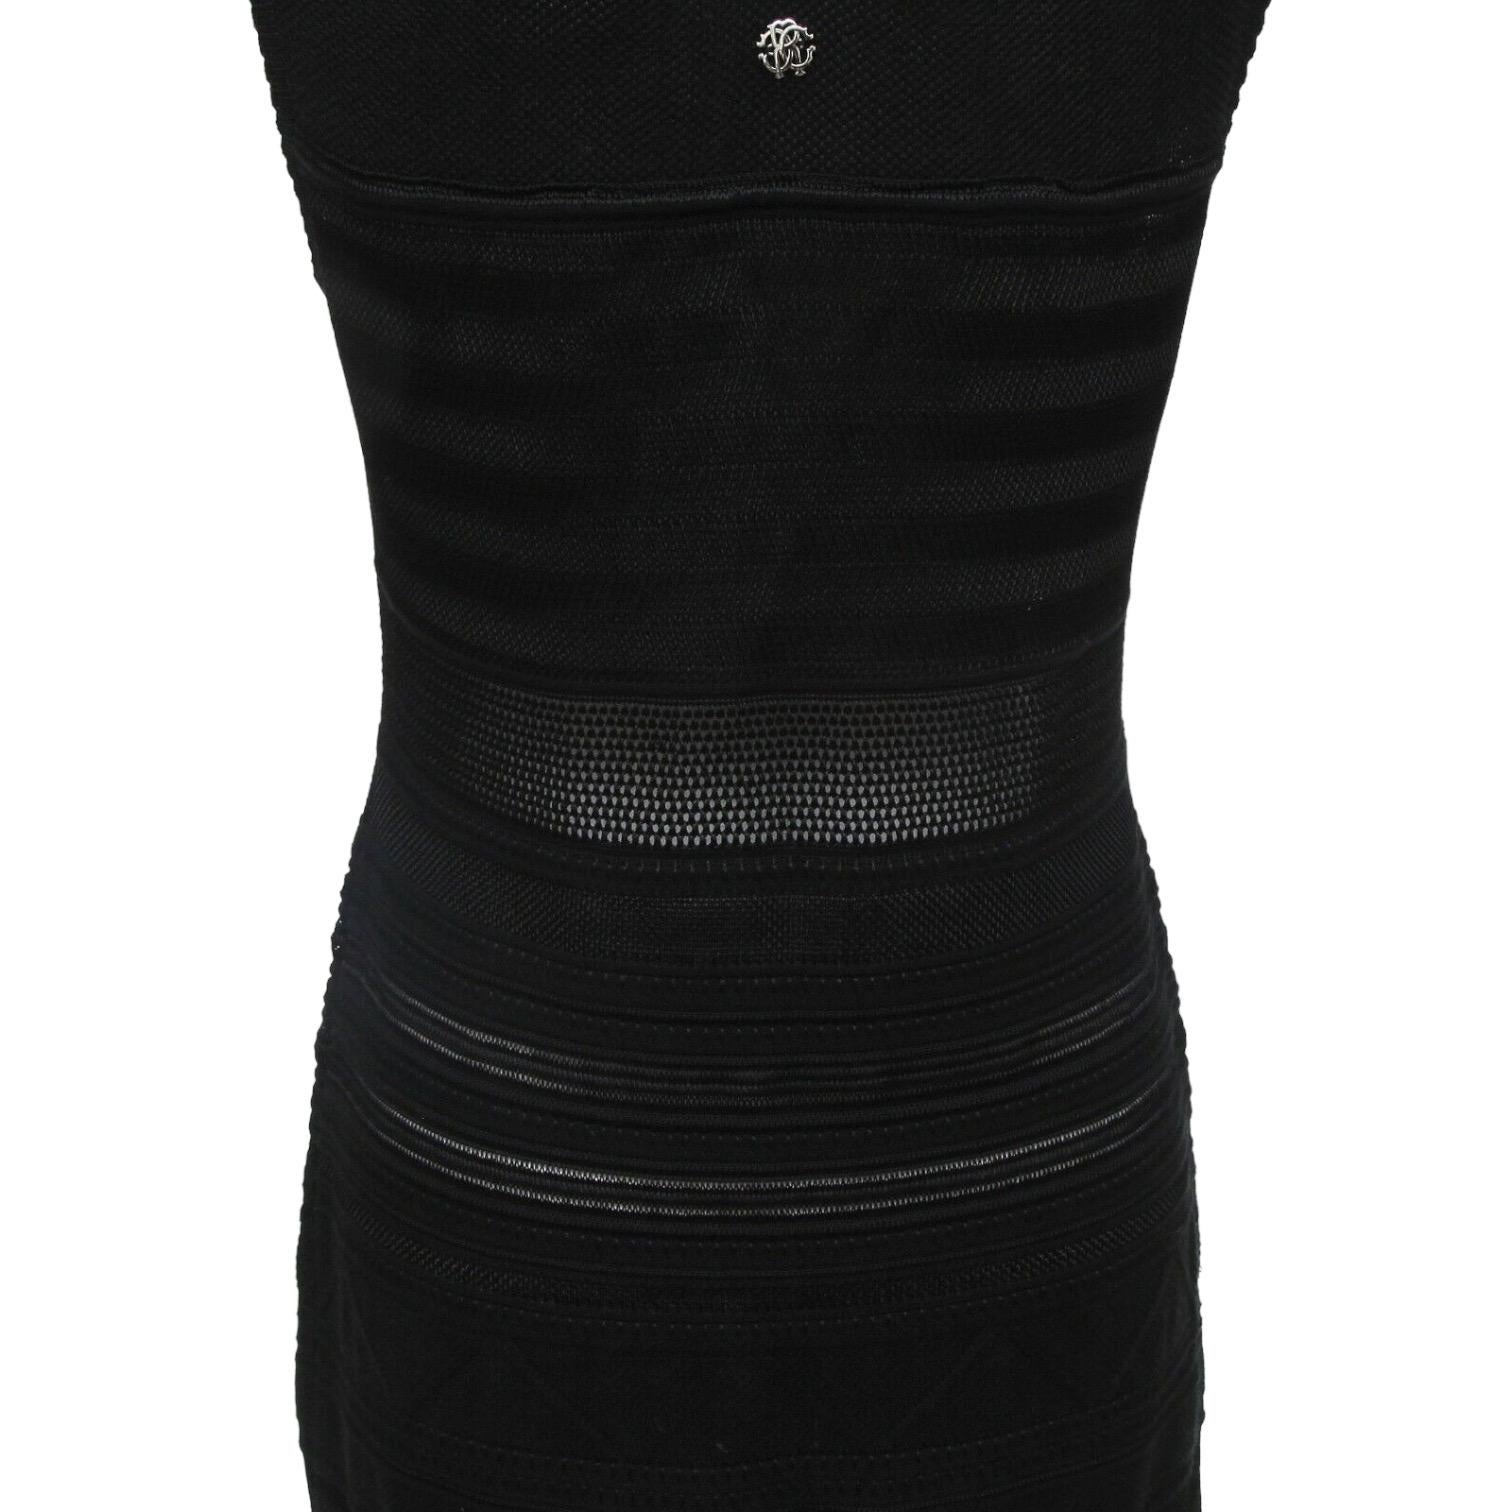 ROBERTO CAVALLI Black Knit Dress Sleeveless Viscose Elastane Slip-On Sz 44 For Sale 1